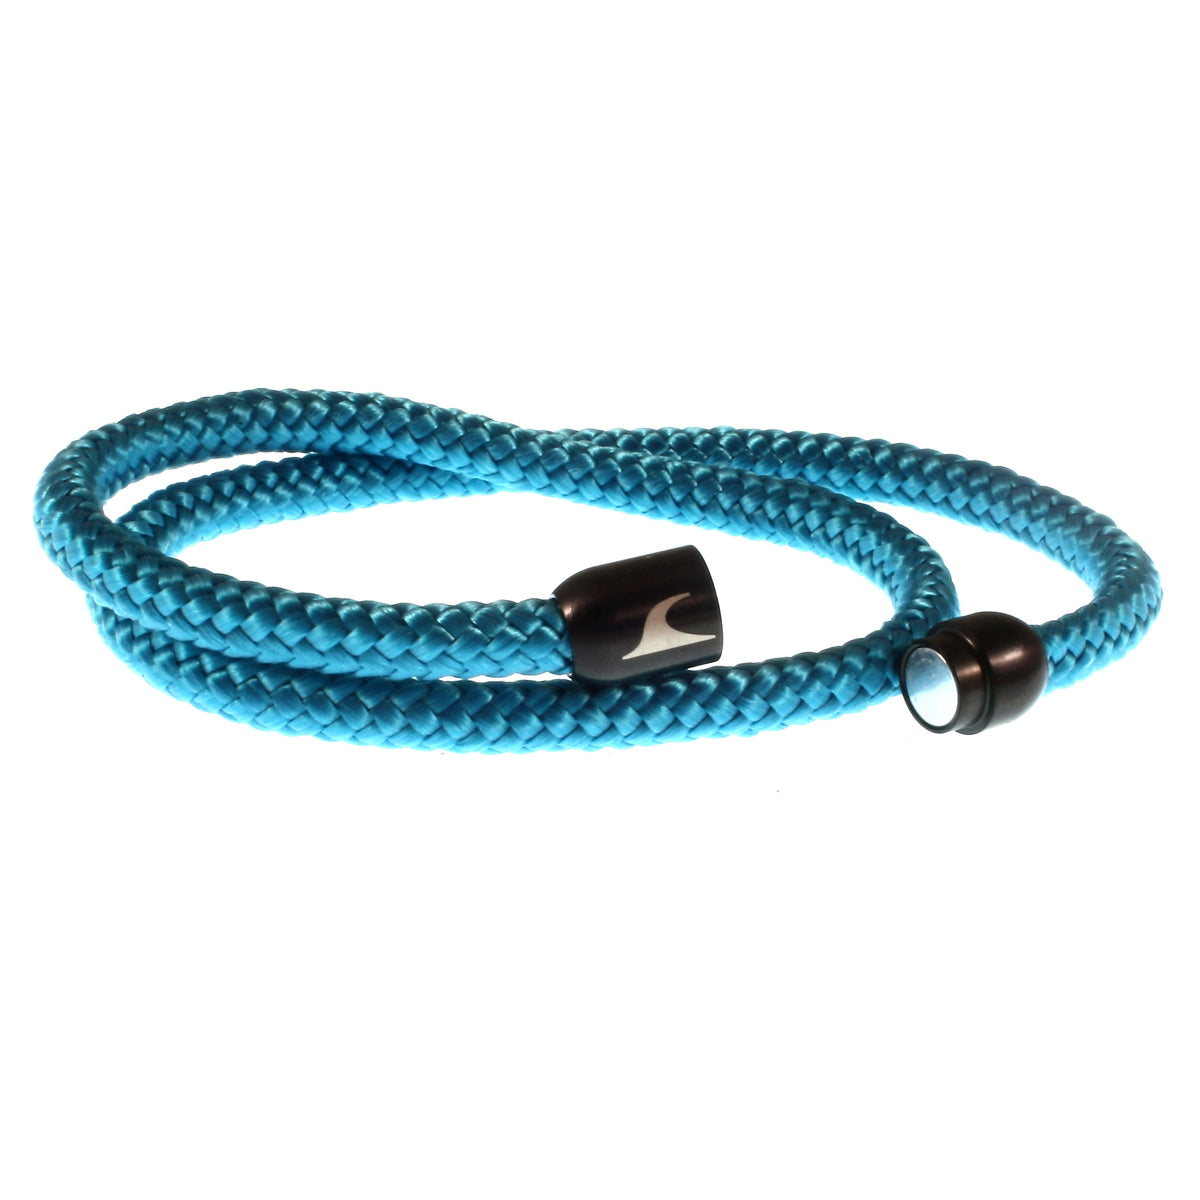 Herren-Segeltau-Armband-damen-hawaii-blau-schwarz-Edelstahlverschluss-offen-wavepirate-shop-st